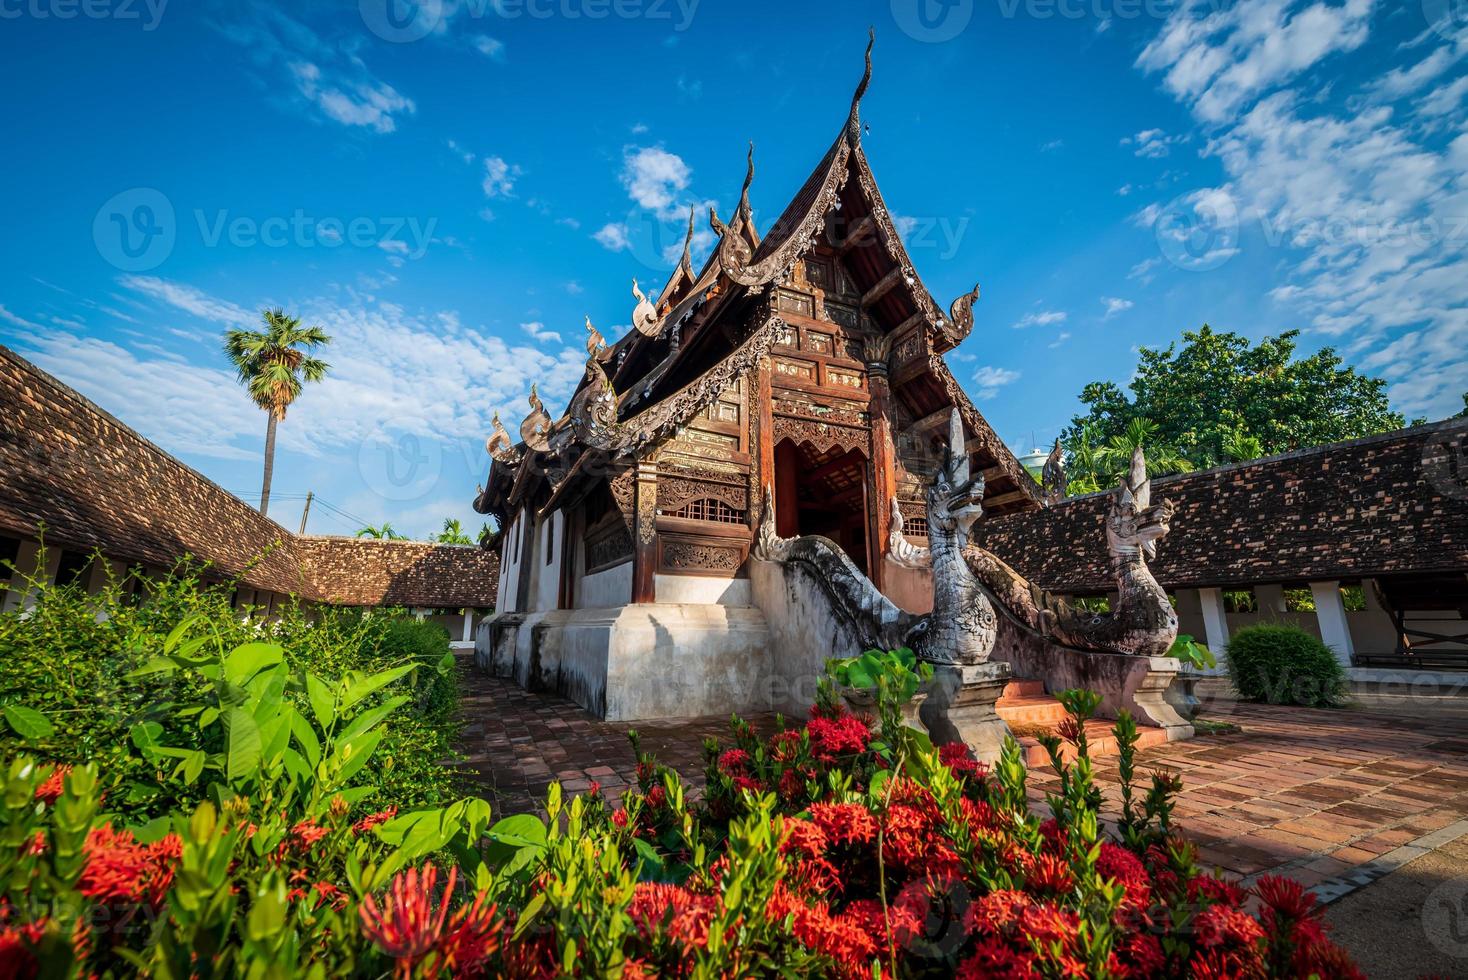 oud tempel Aan blauw lucht met wolk in chaing mei, Thailand foto